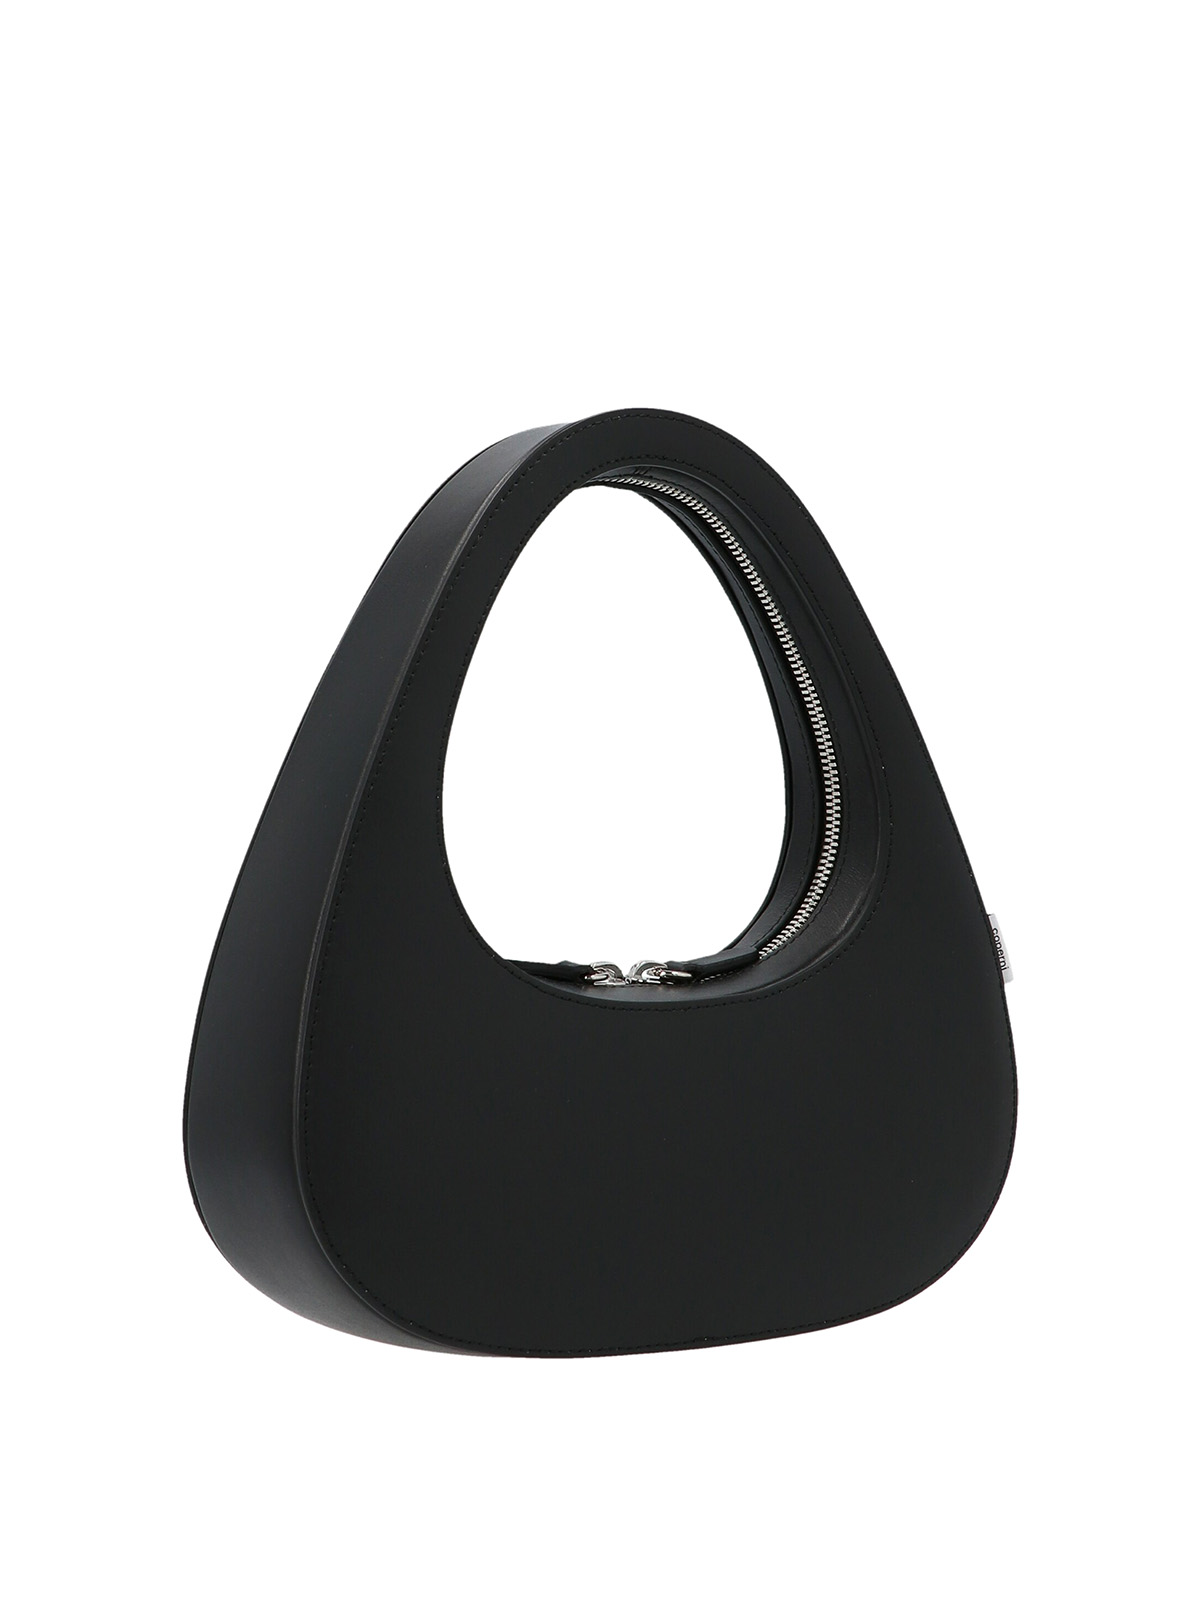 Shop Coperni Bolso Shopping - Swipe Bag Mini In Negro